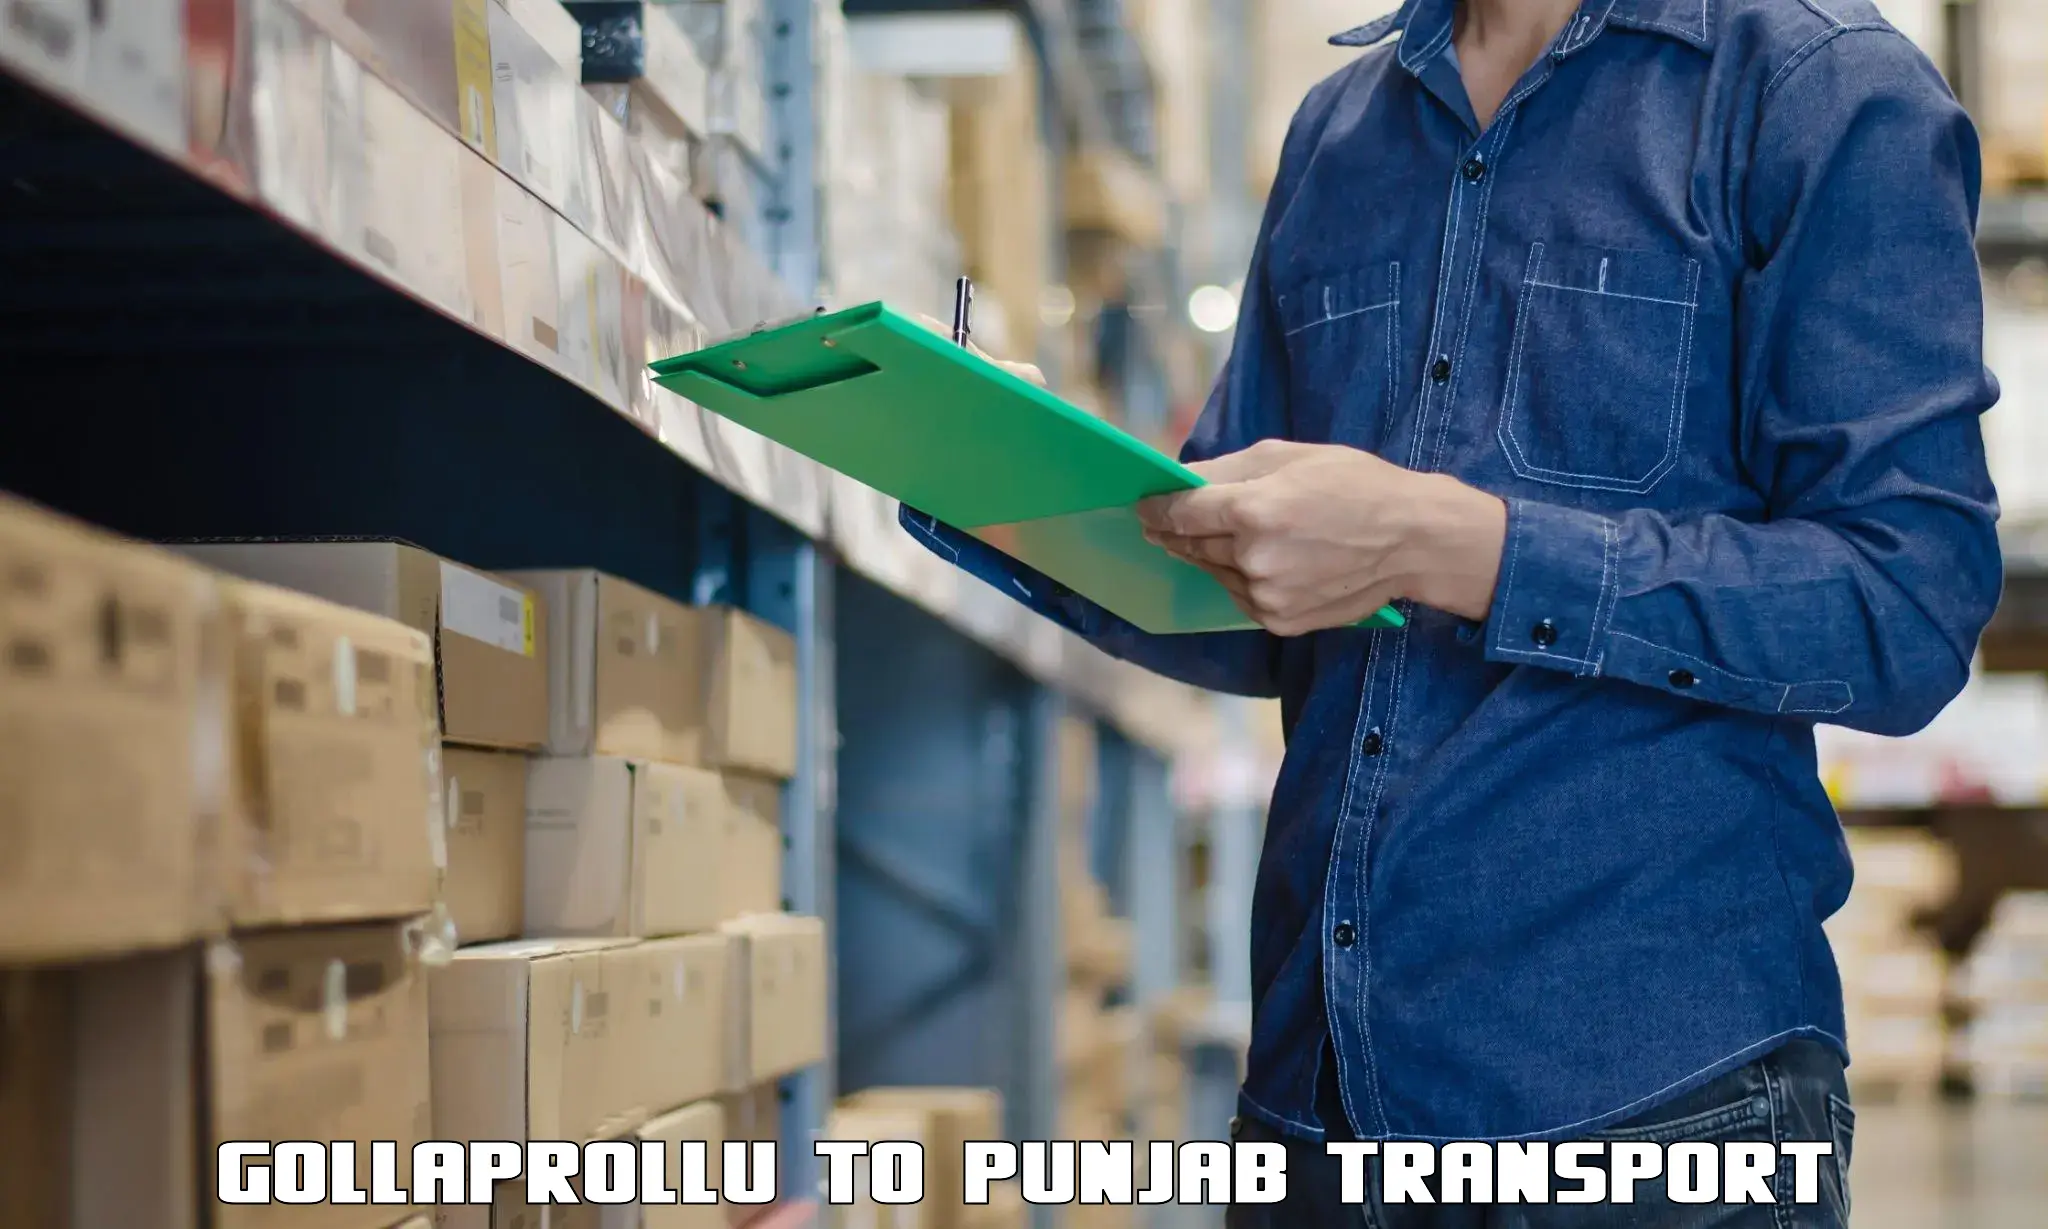 Truck transport companies in India Gollaprollu to Faridkot